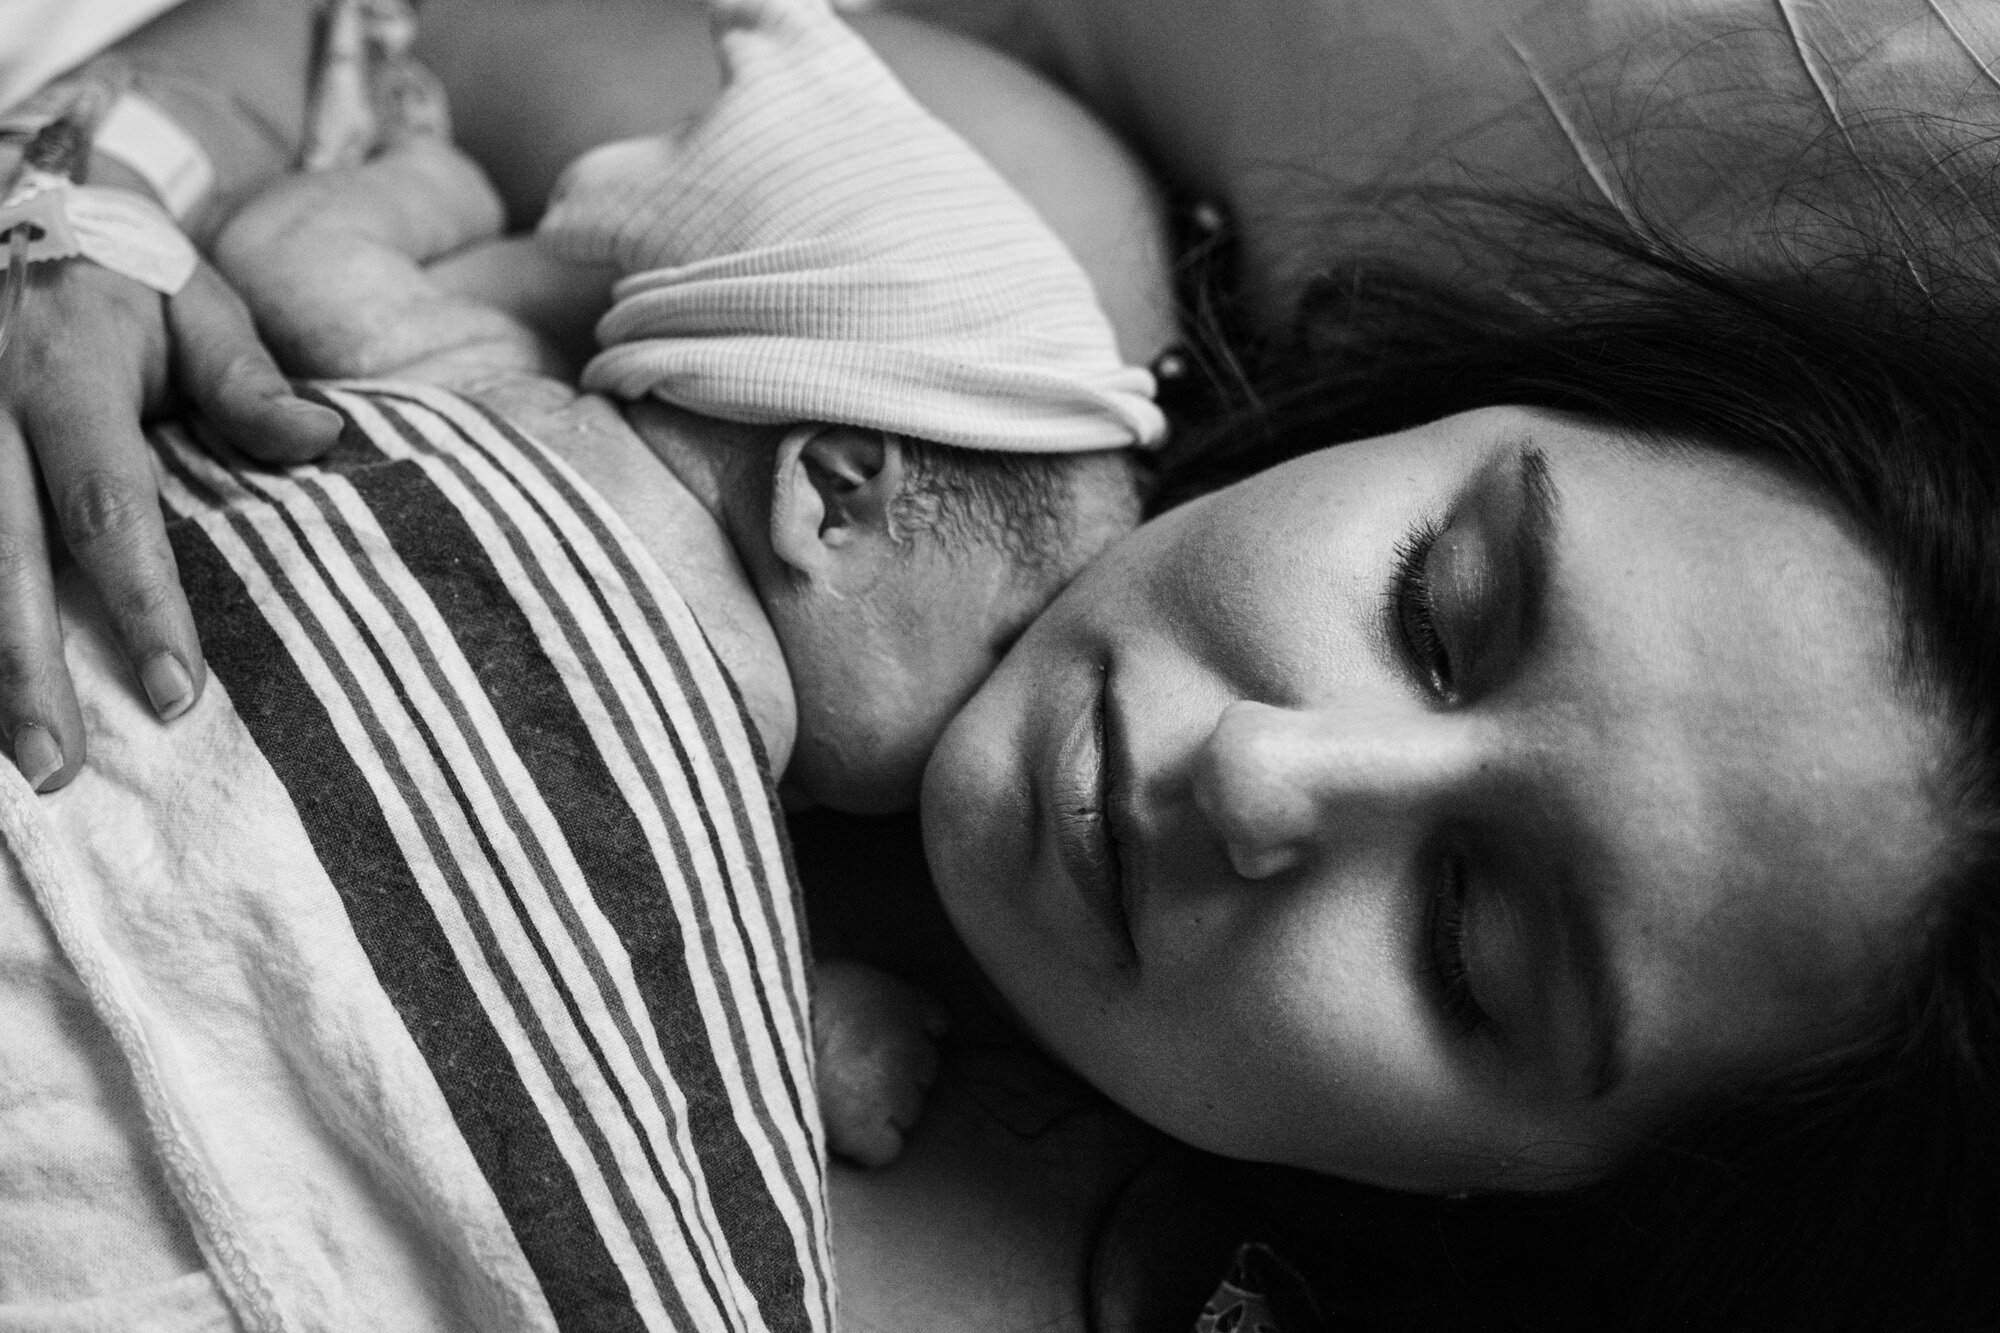 jacksonville birth mom resting while holding her newborn baby boy